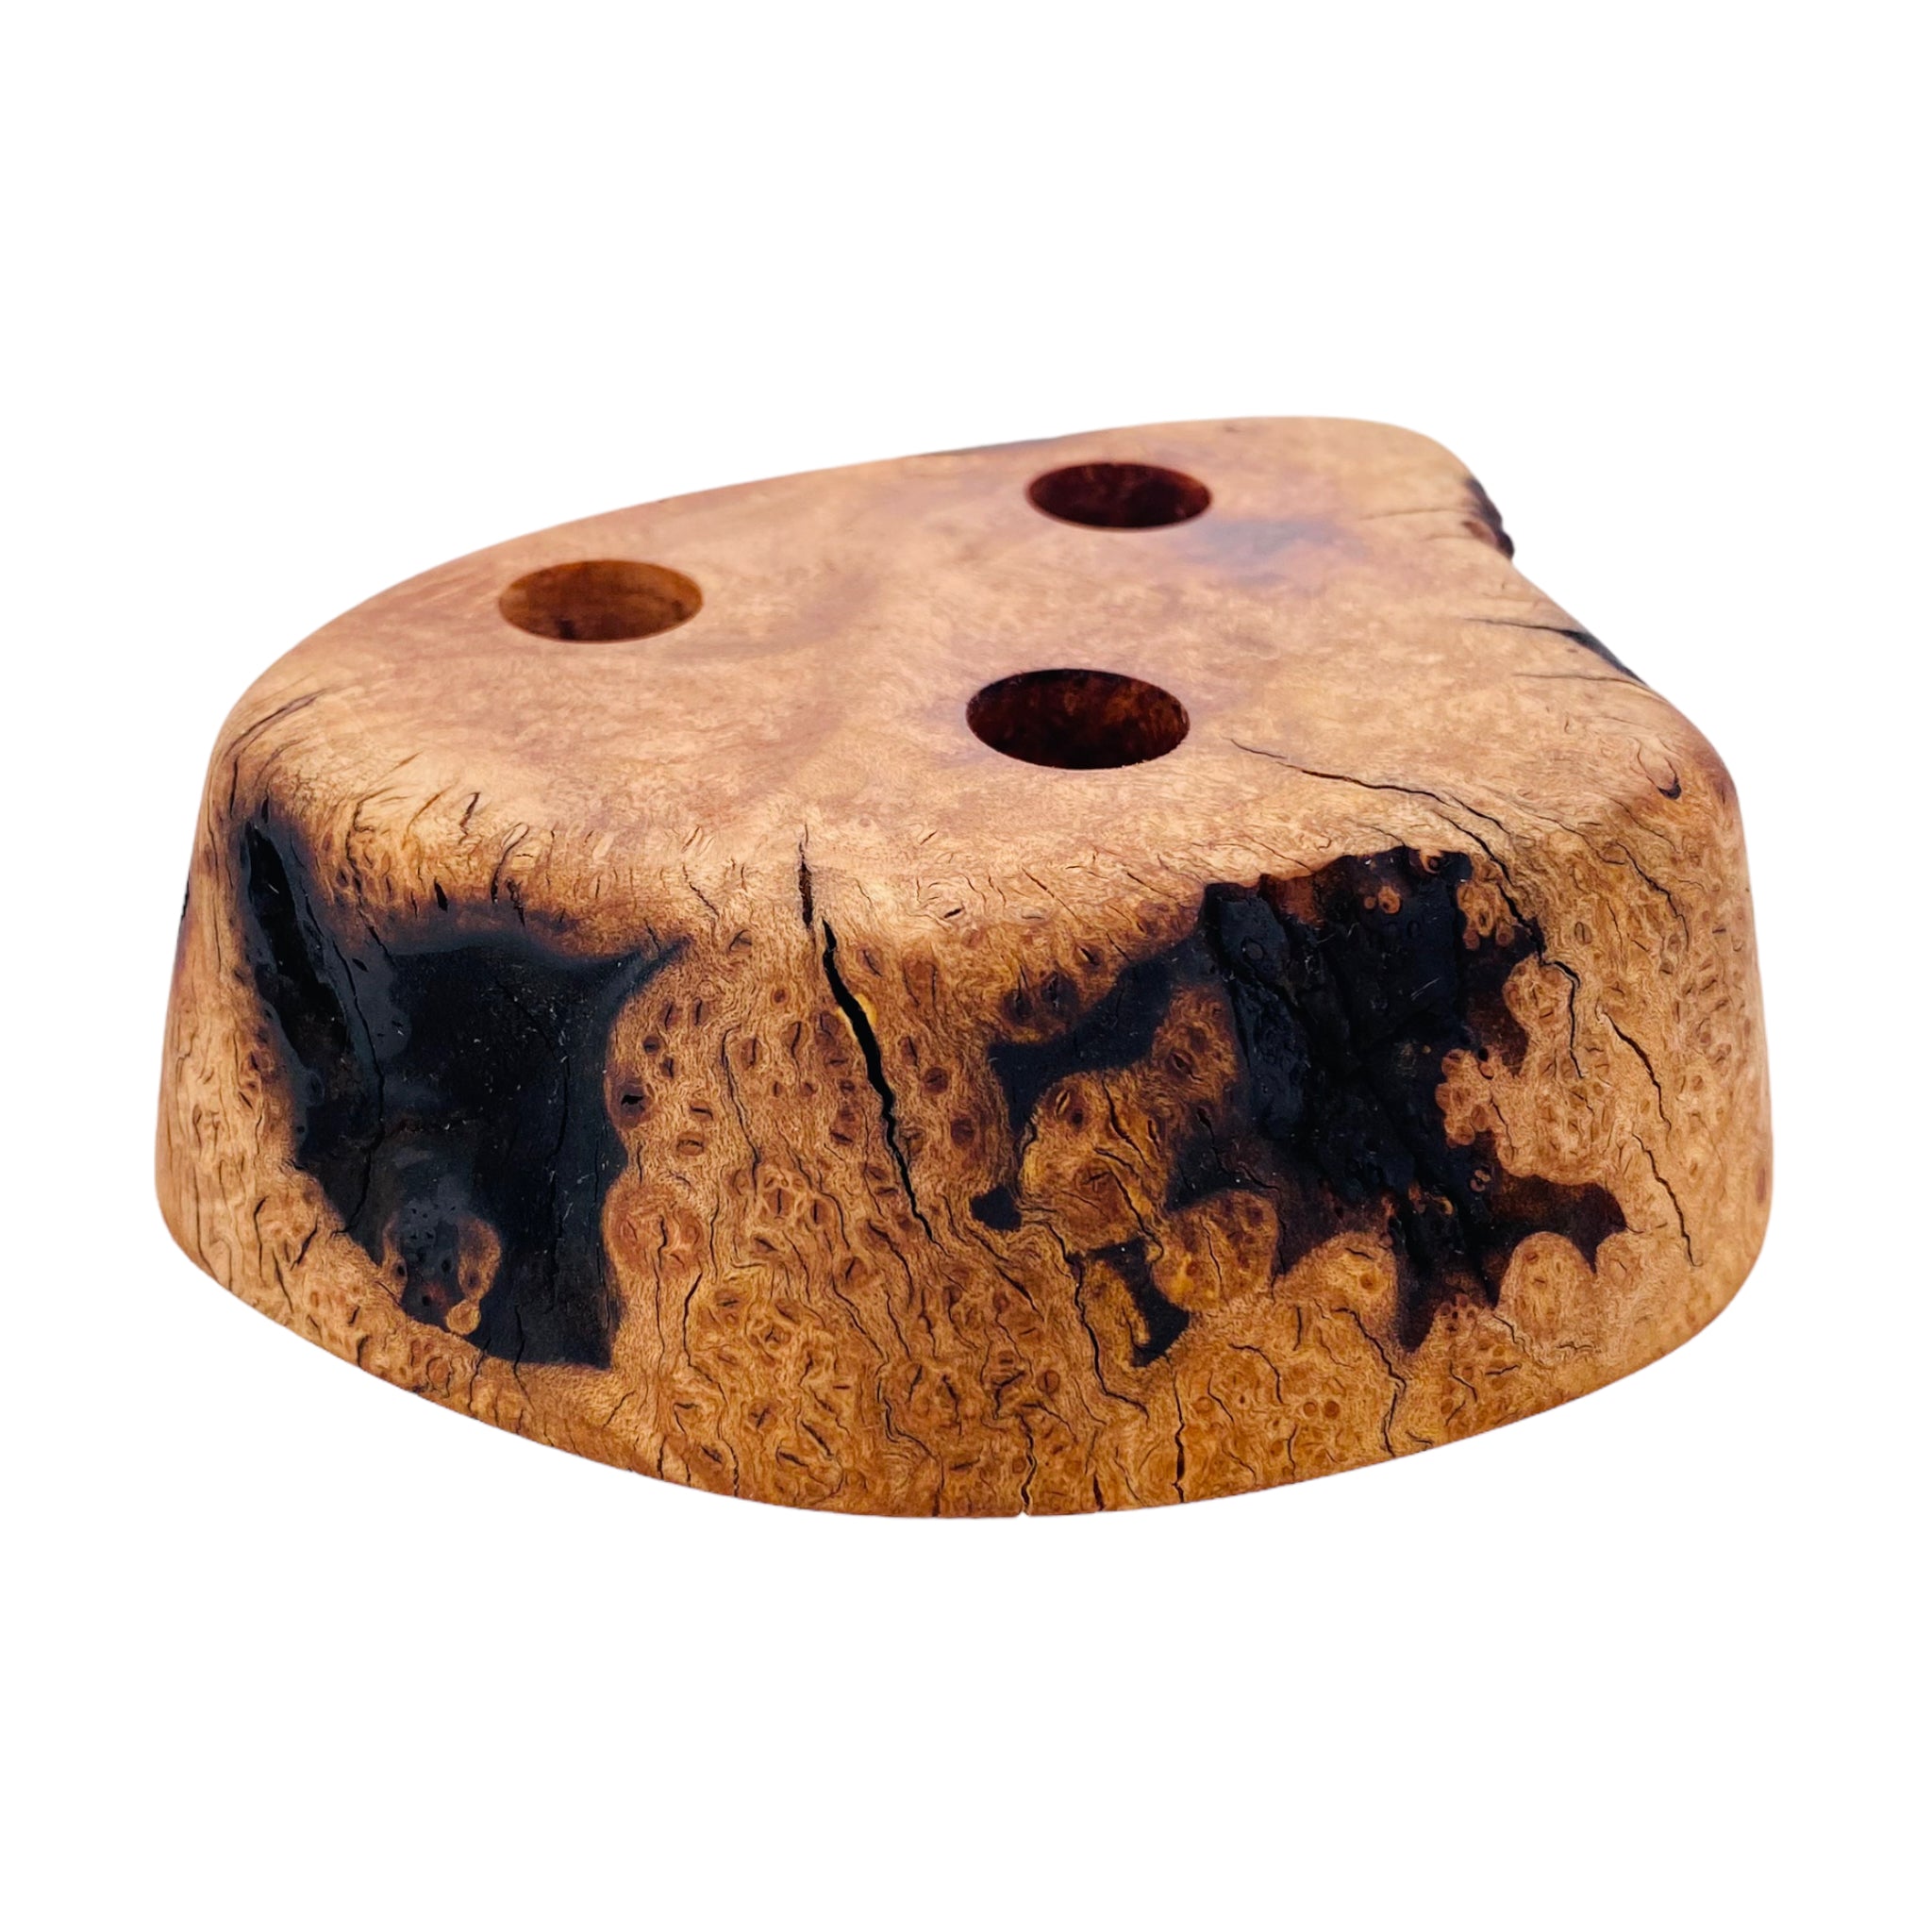 3 Hole Wood Display Stand Holder For 14mm Bong Bowl Pieces Or Quartz Bangers - Charred Manzanita Burl